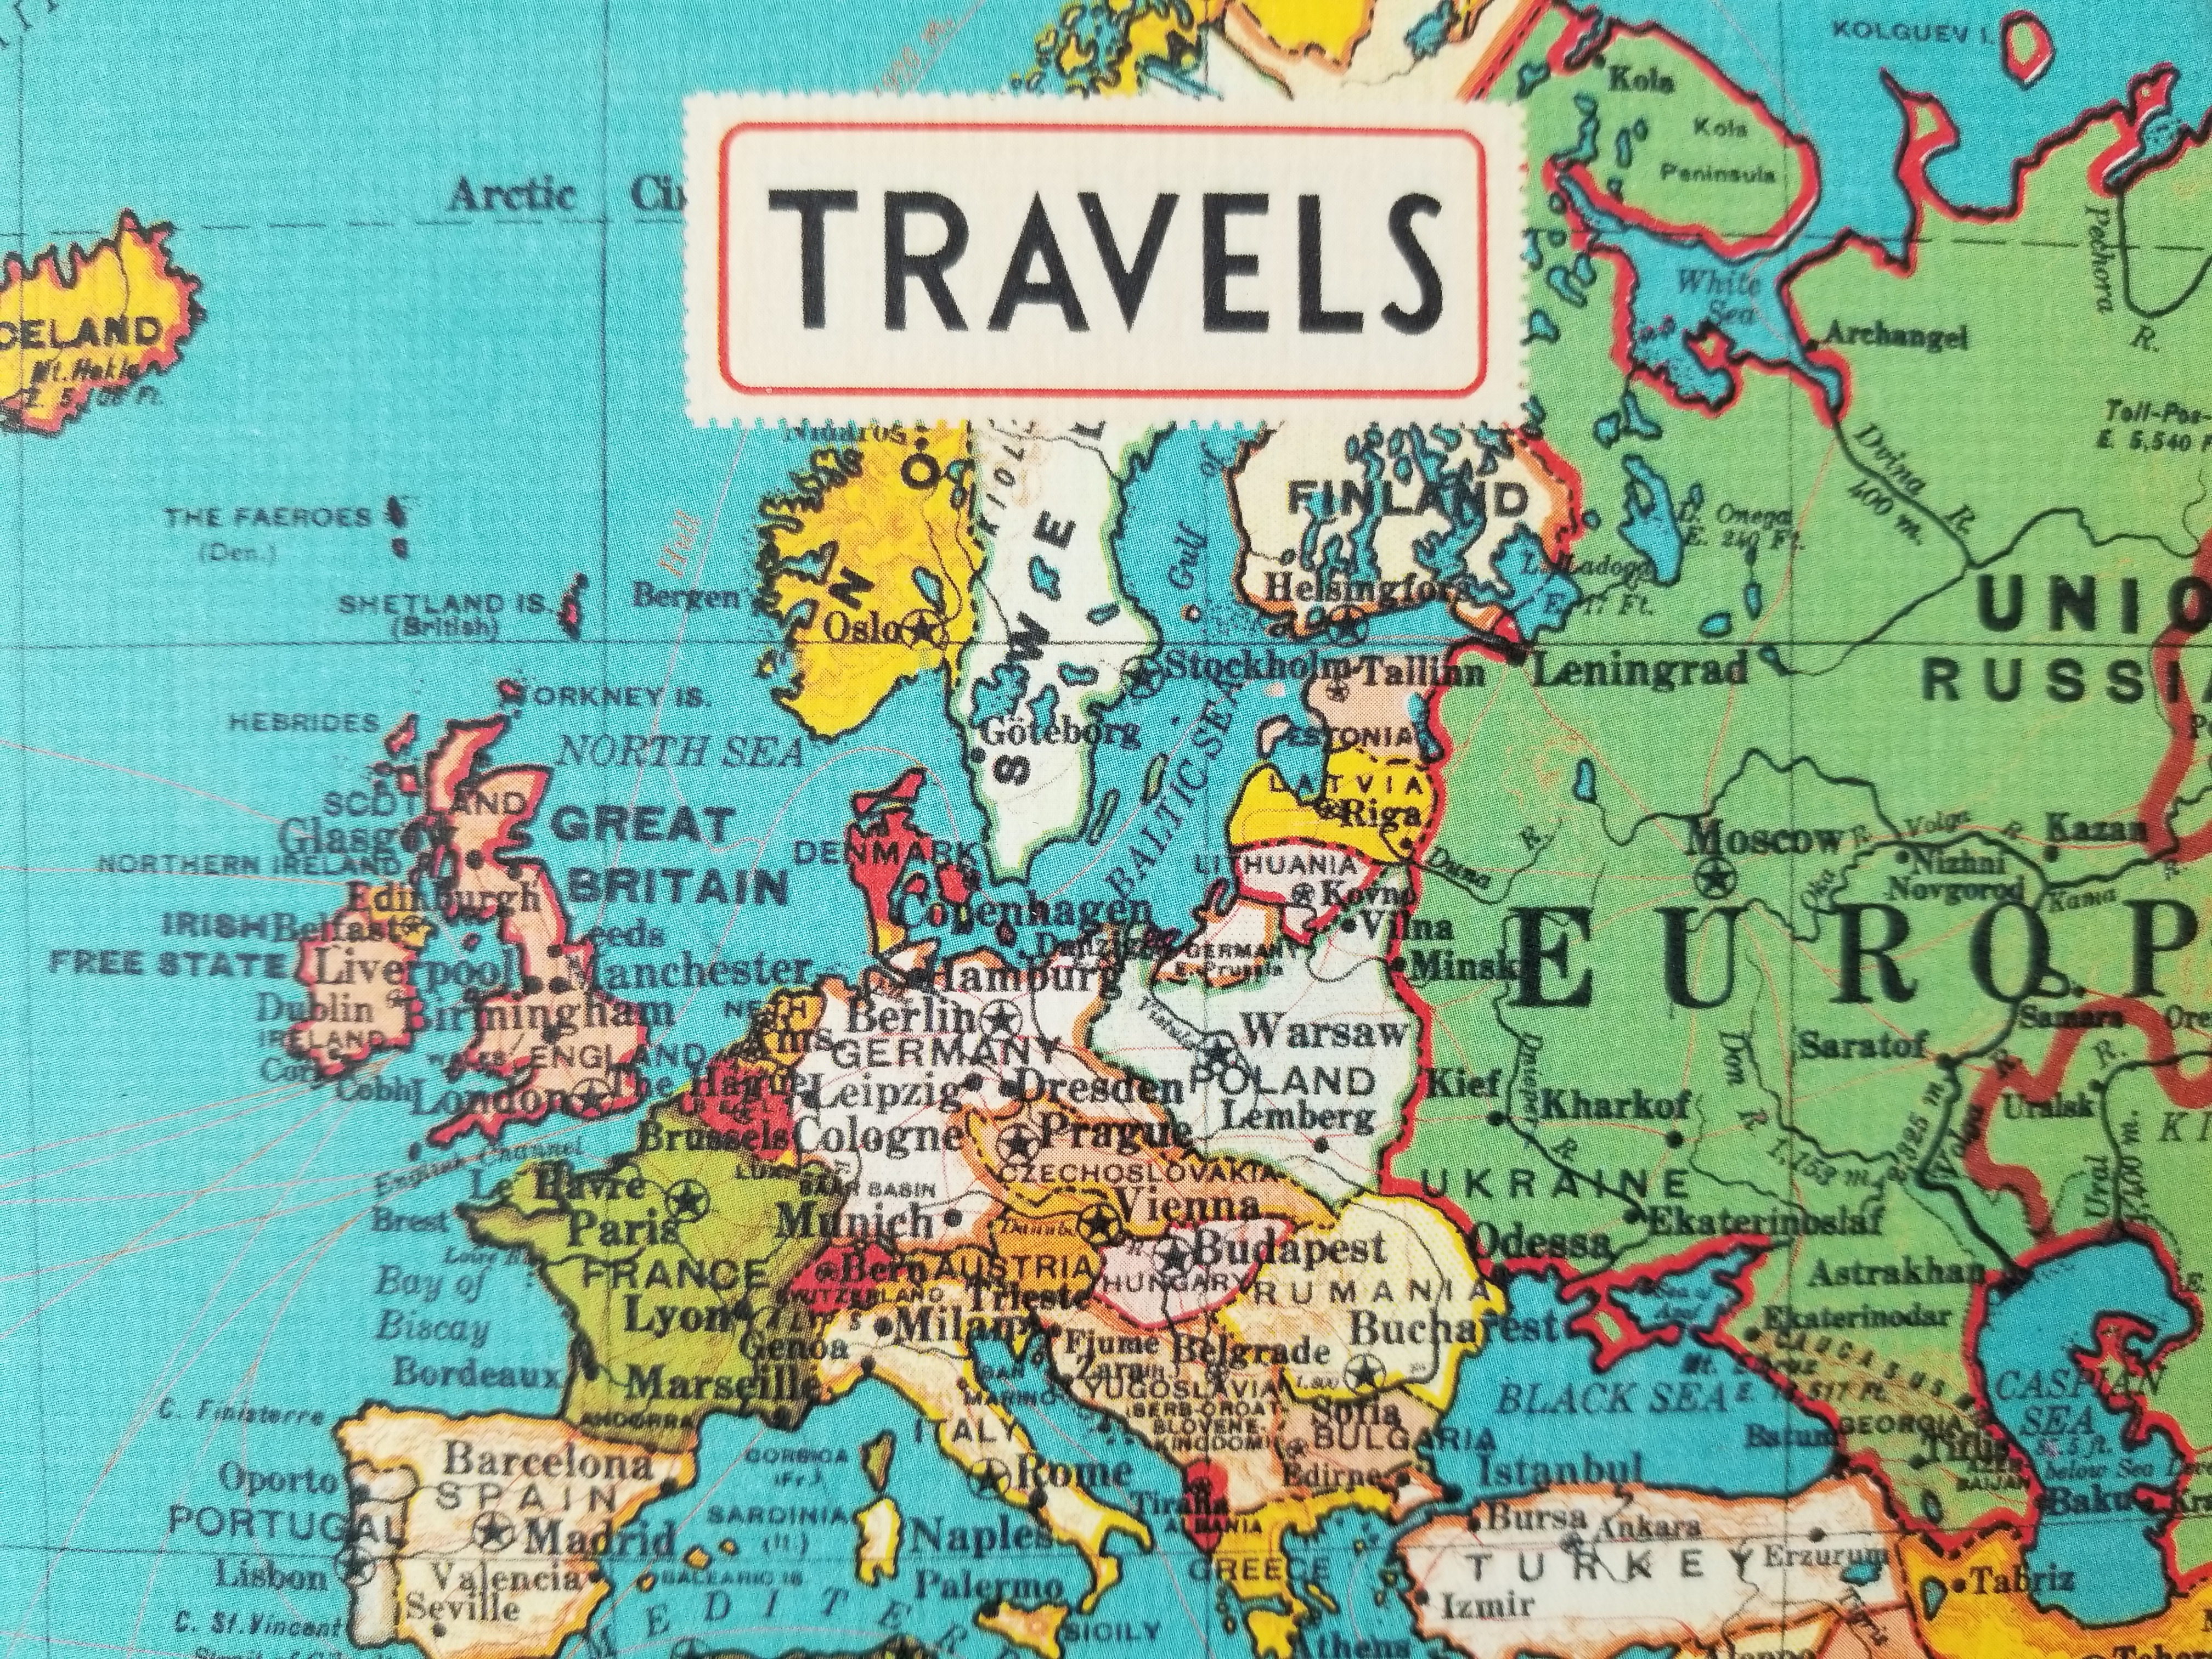 Travel image map of Europe